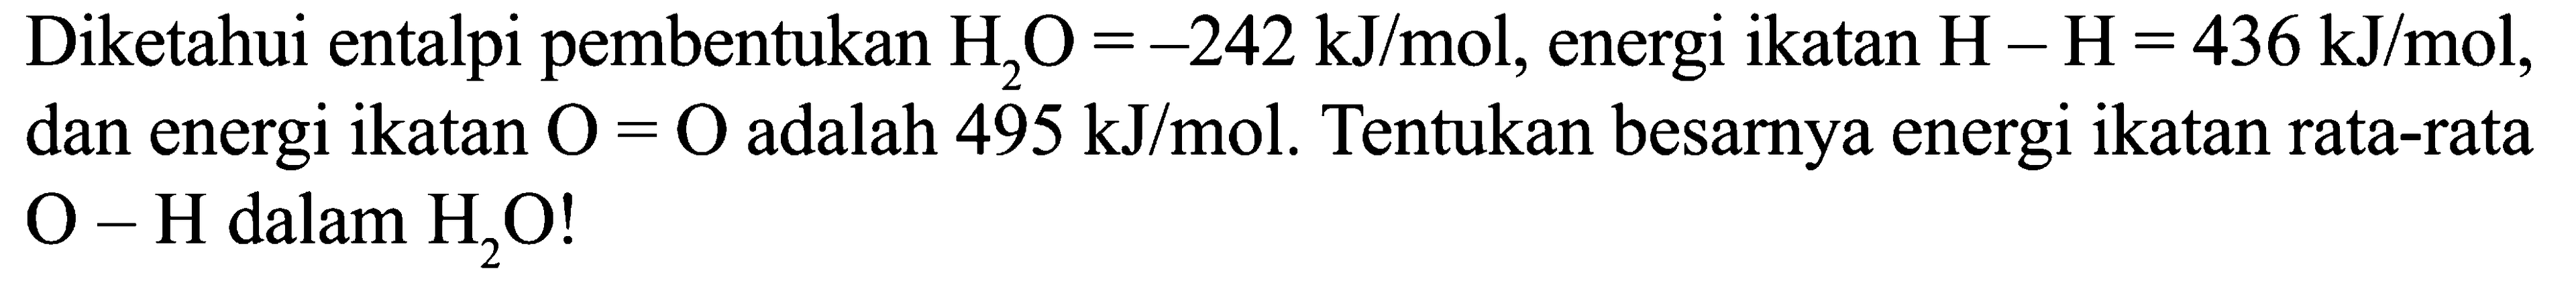 Diketahui entalpi pembentukan H2O = -242 kJ/mol, energi ikatan H - H = 436 kJ/mol, dan energi ikatan O = O adalah 495 kJ/mol. Tentukan besarnya energi ikatan rata-rata O - H dalam H2O!